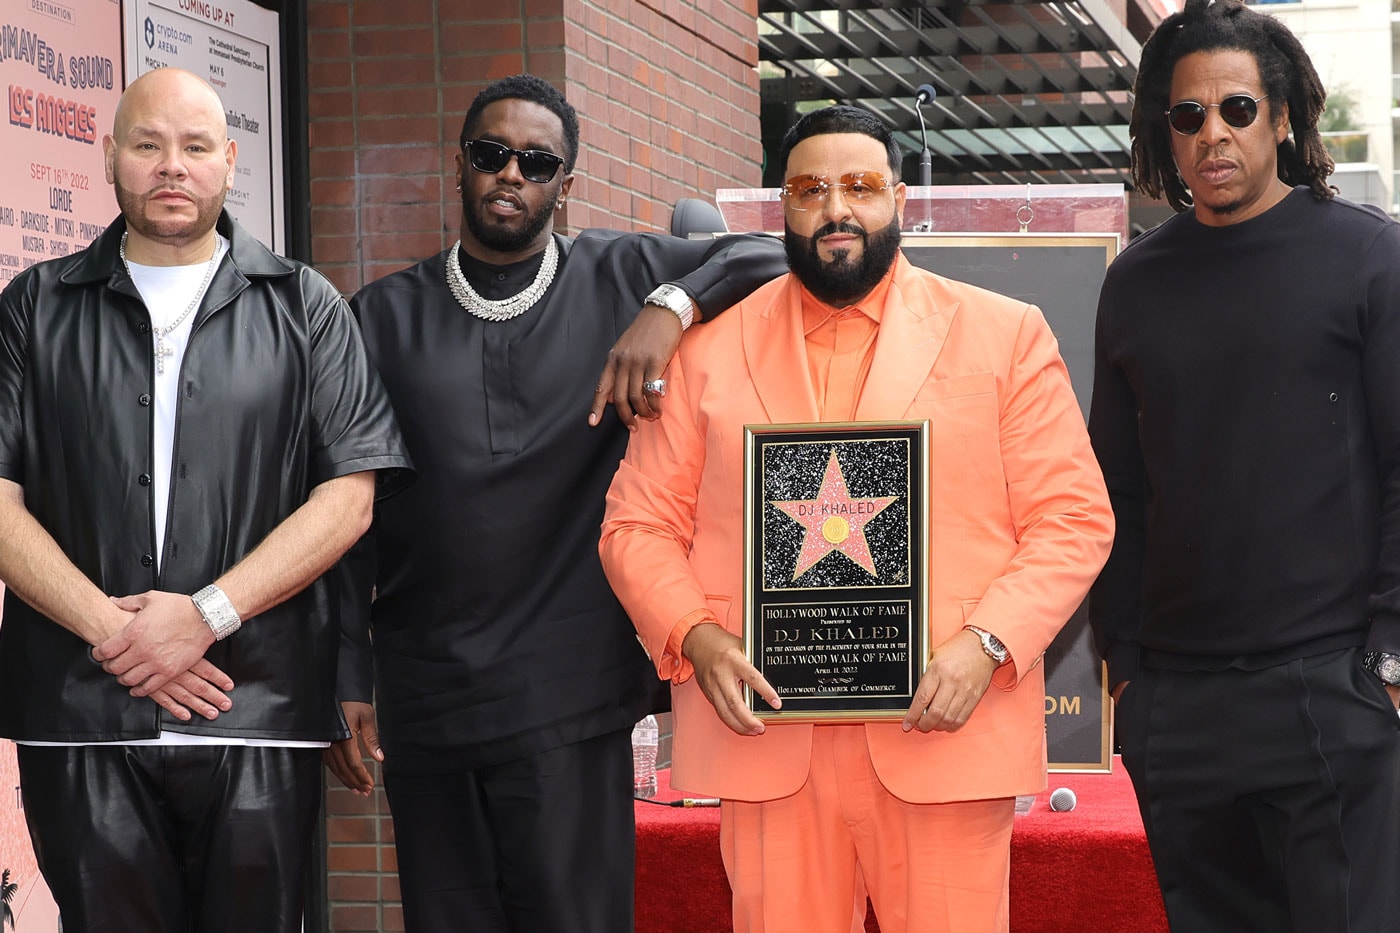 DJ Khaled Receives Star on Hollywood Walk of Fame jay-z diddy fat joe we the best air jordan 5 brand rapper producer hip hop